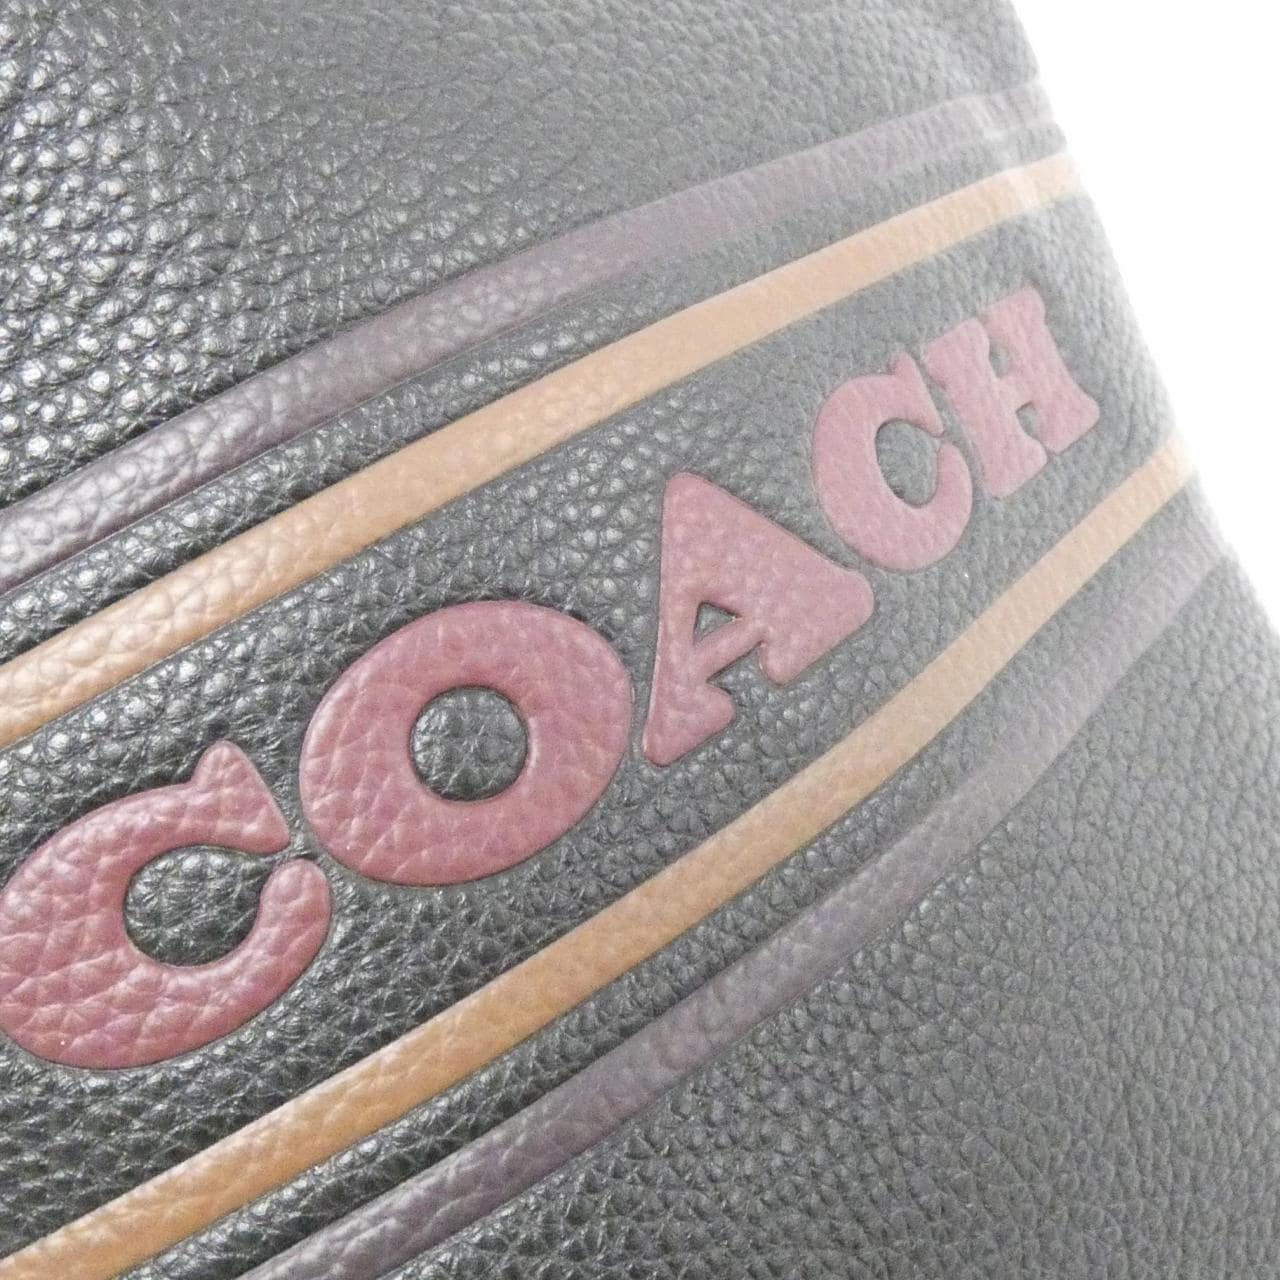 [BRAND NEW] Coach CH248 Shoulder Bag